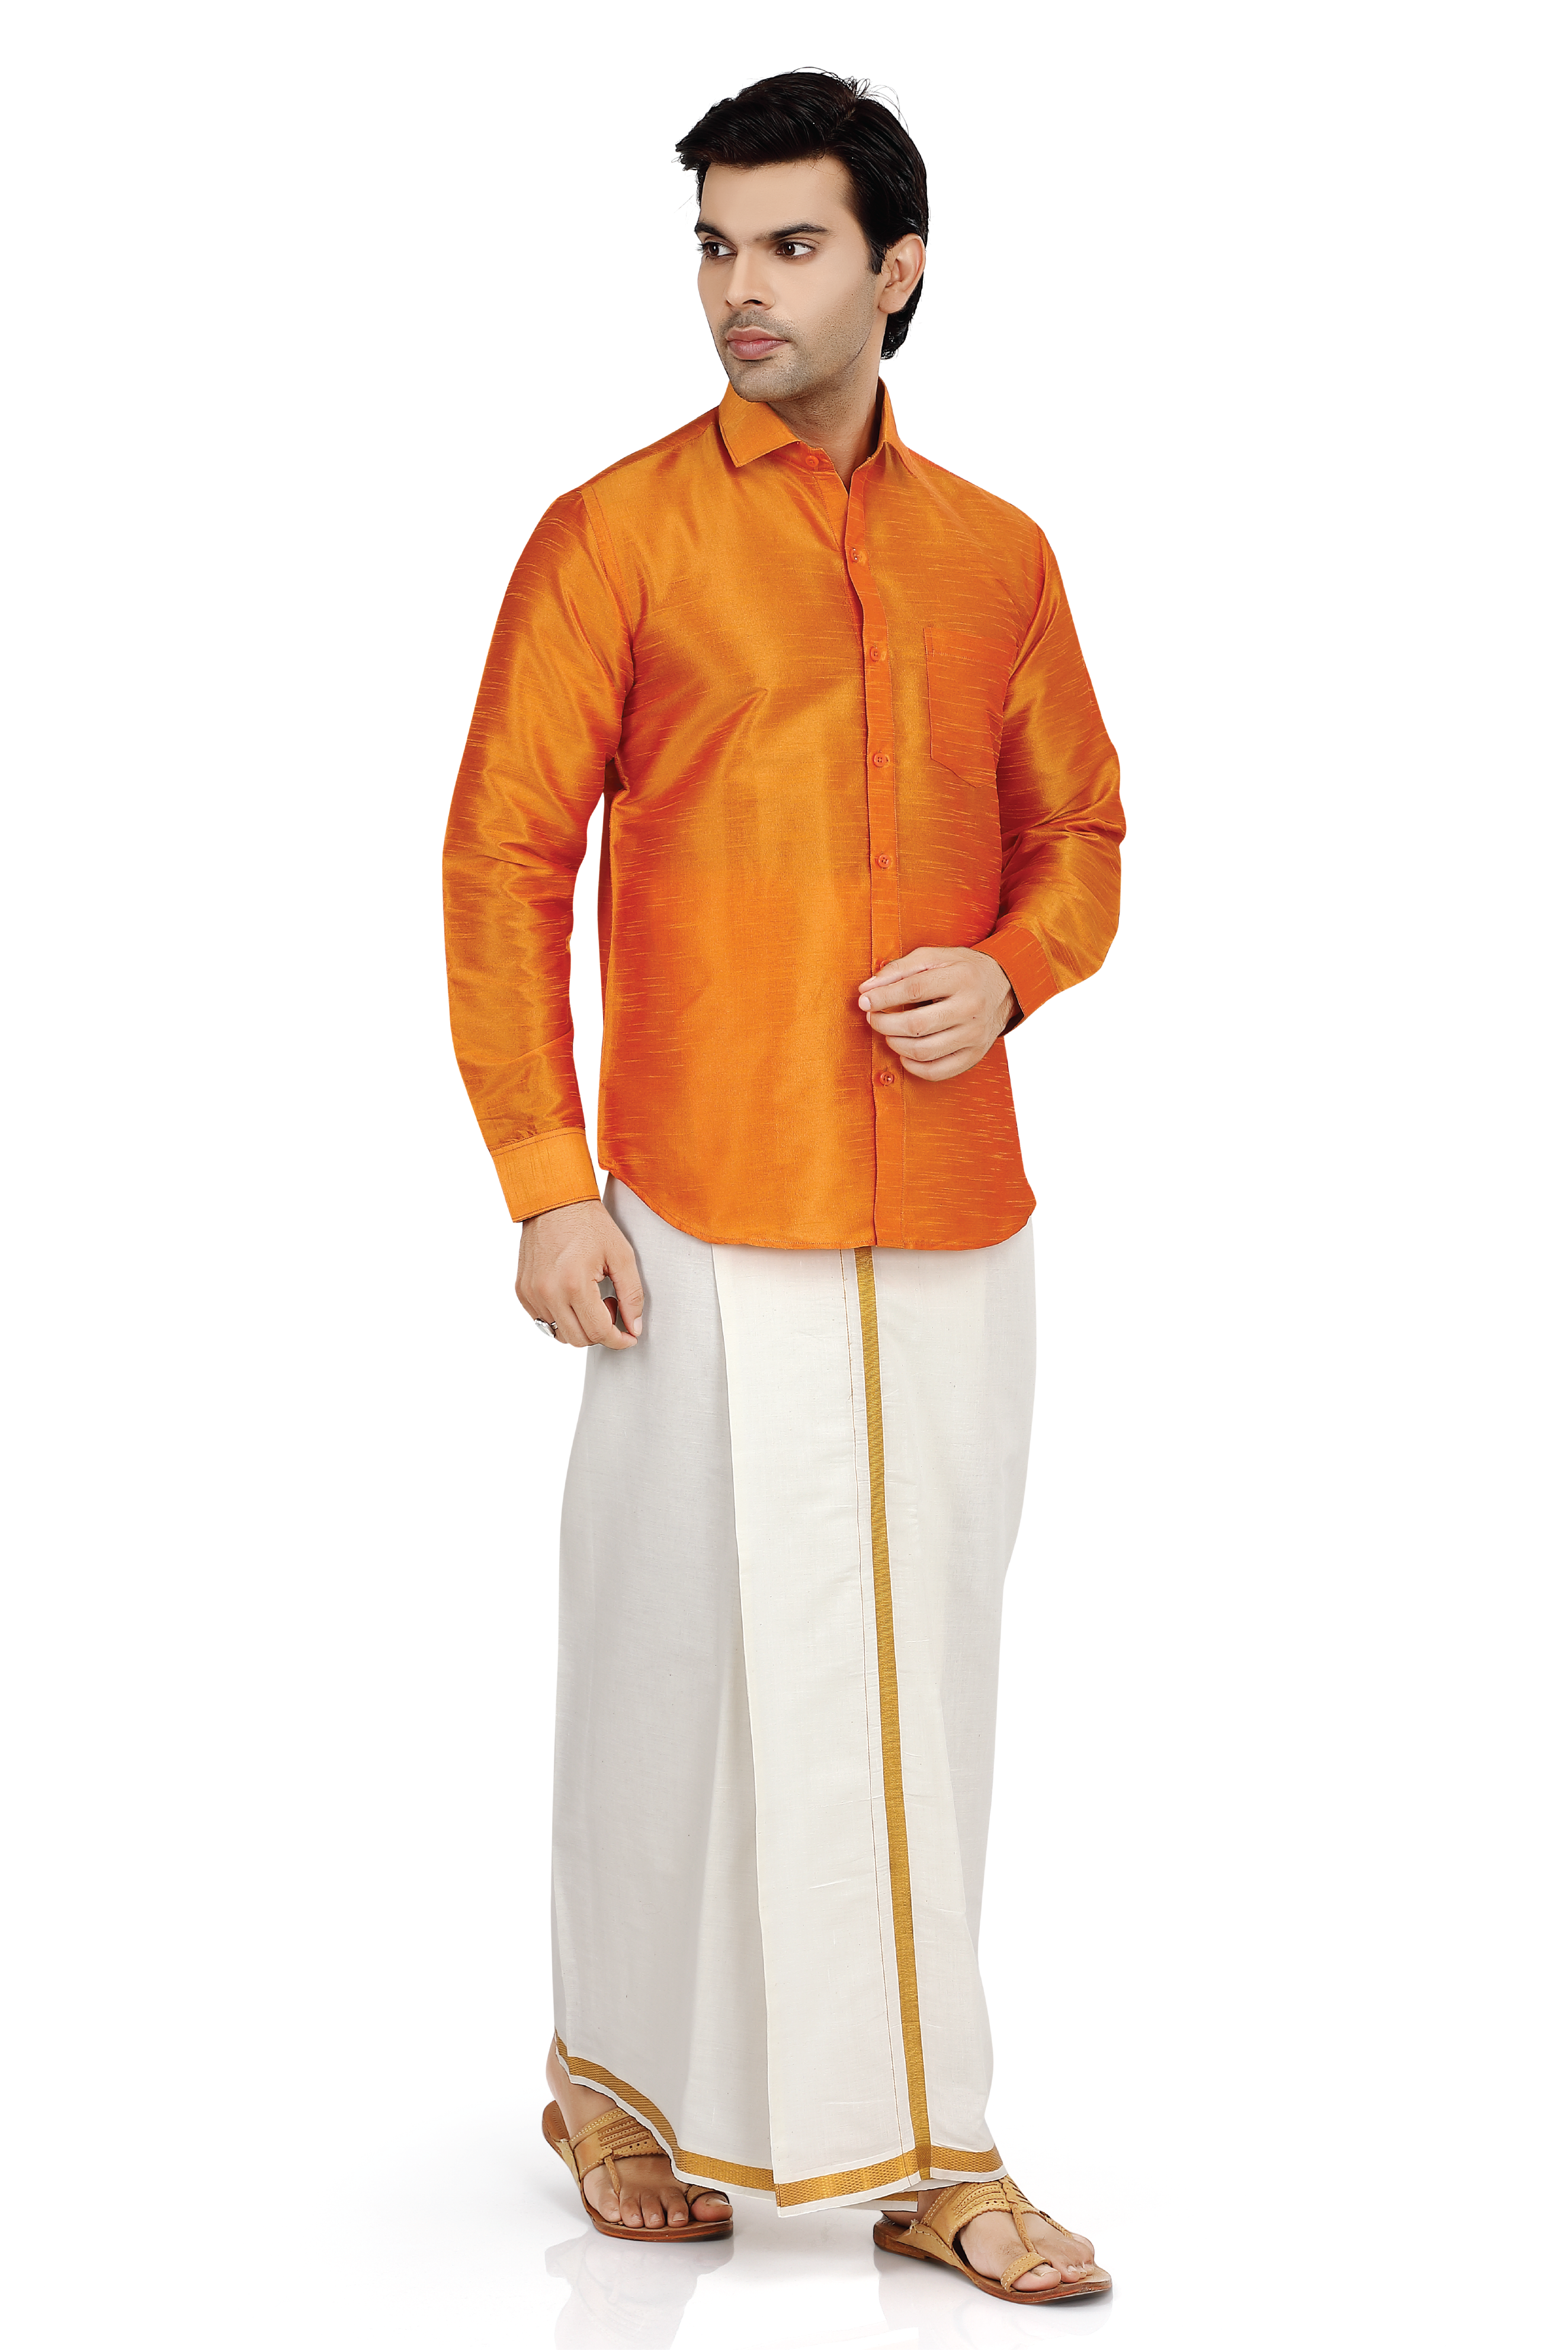 Dupion Silk Shirt in Orange Full sleeves with Dhoti - Premium Dhoti Kurta from Dapper Ethnic - Just $95! Shop now at Dulhan Exclusives